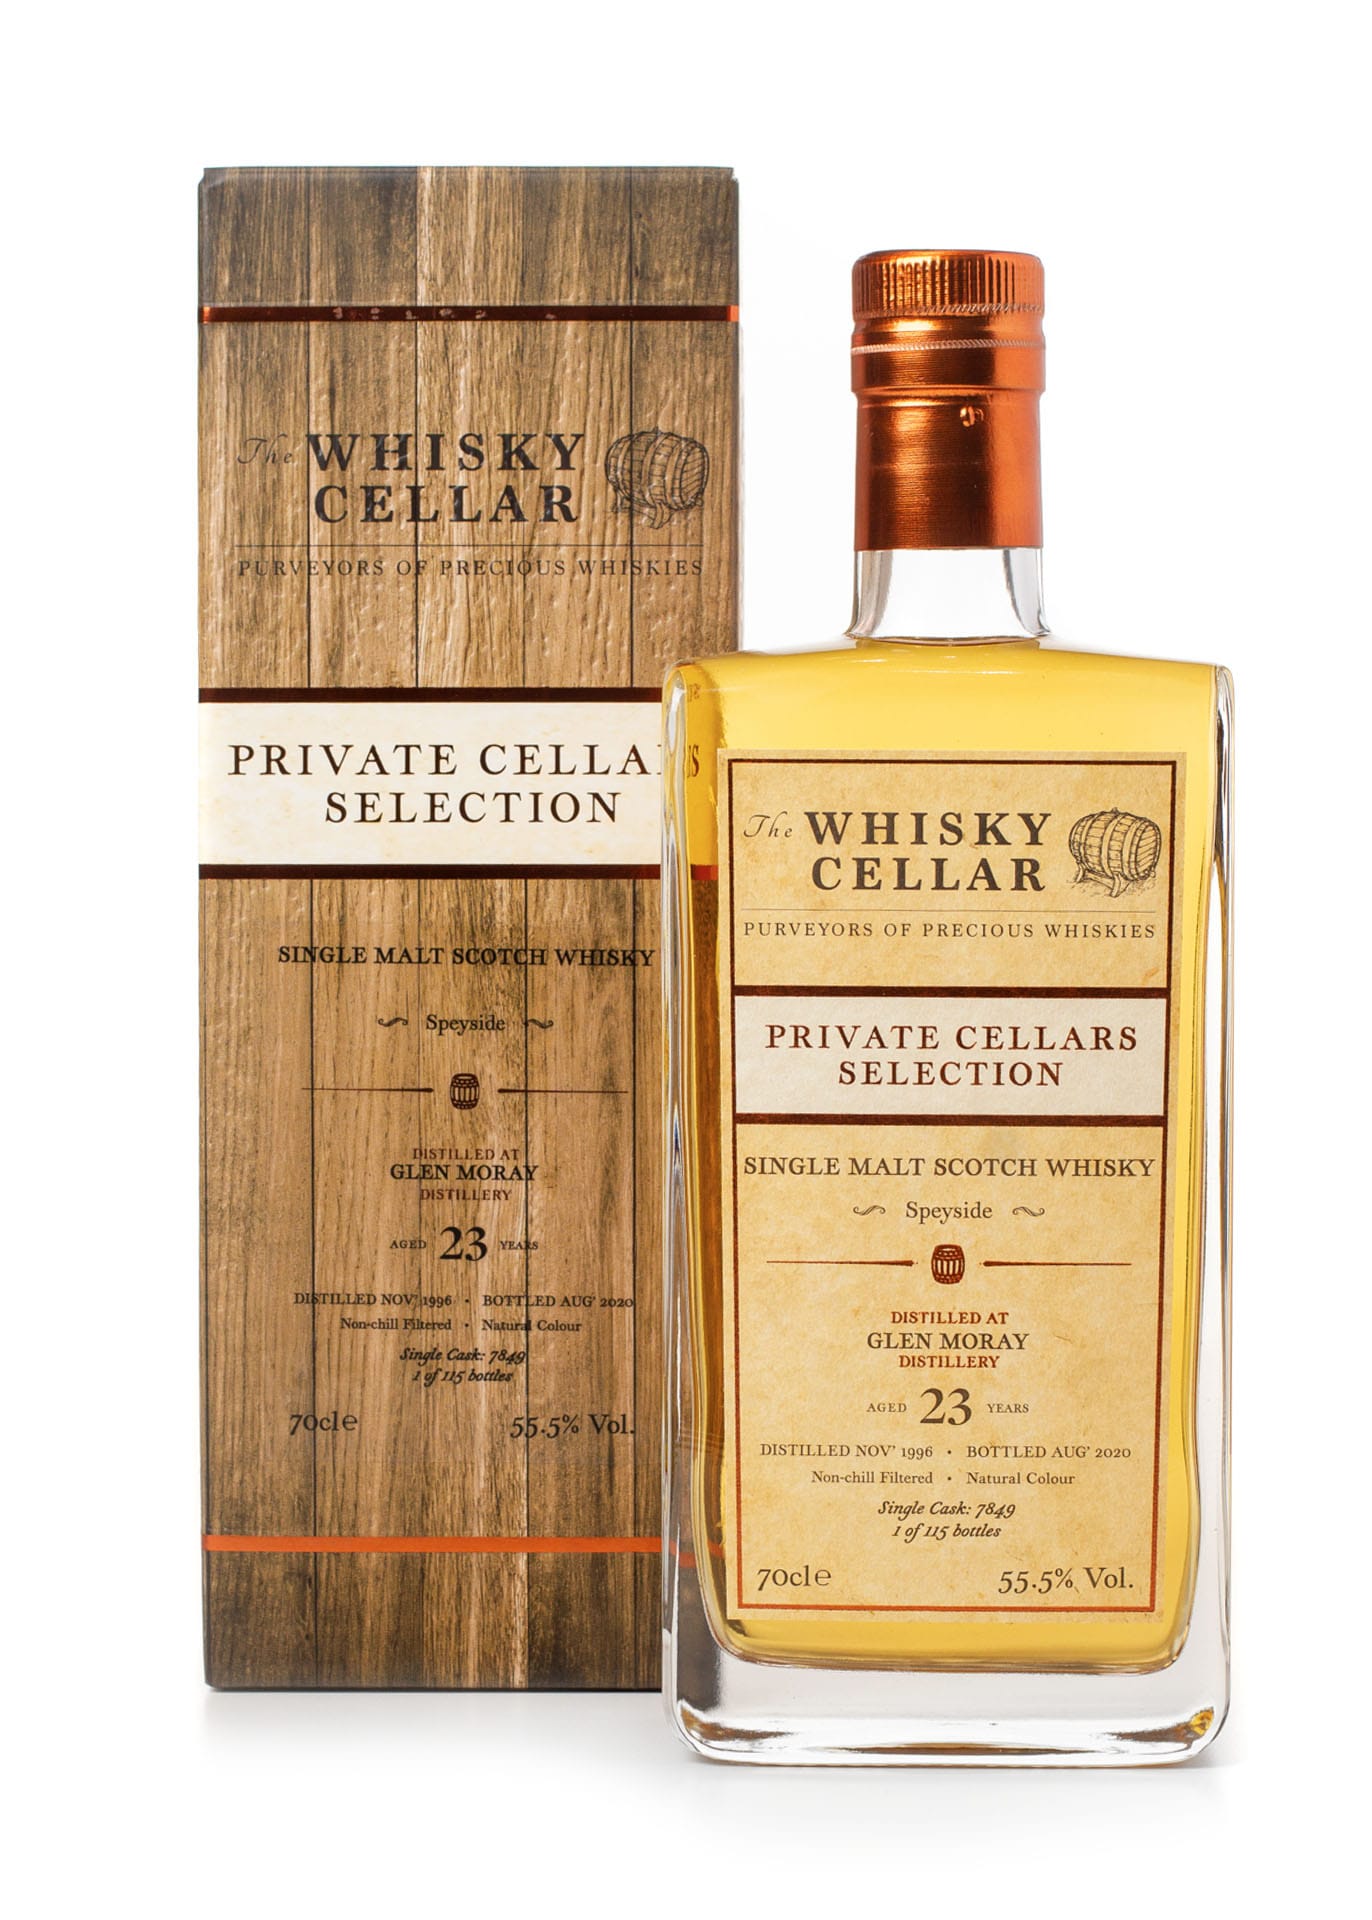 Glen Moray 23 Year Old Single Malt Scotch Whisky from The Whisky Cellar